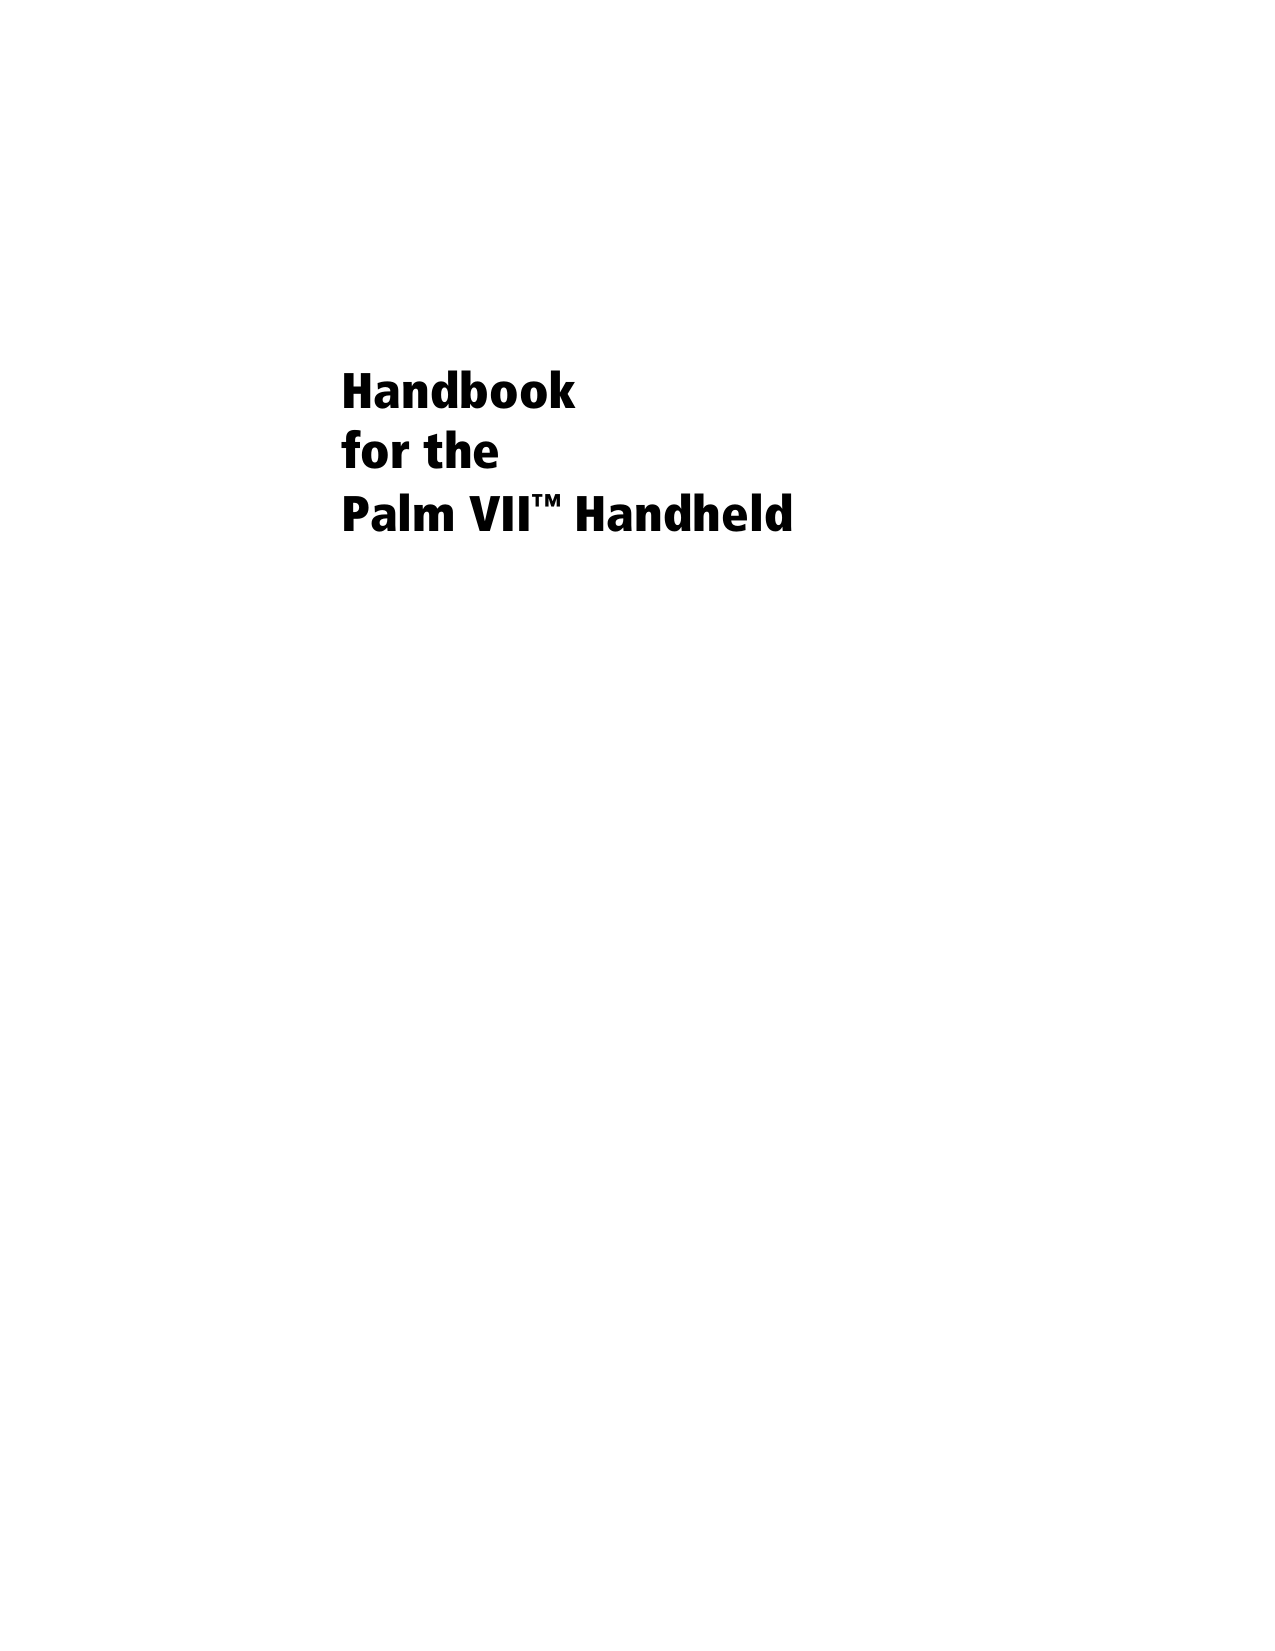 Handbookfor the Palm VII™ Handheld